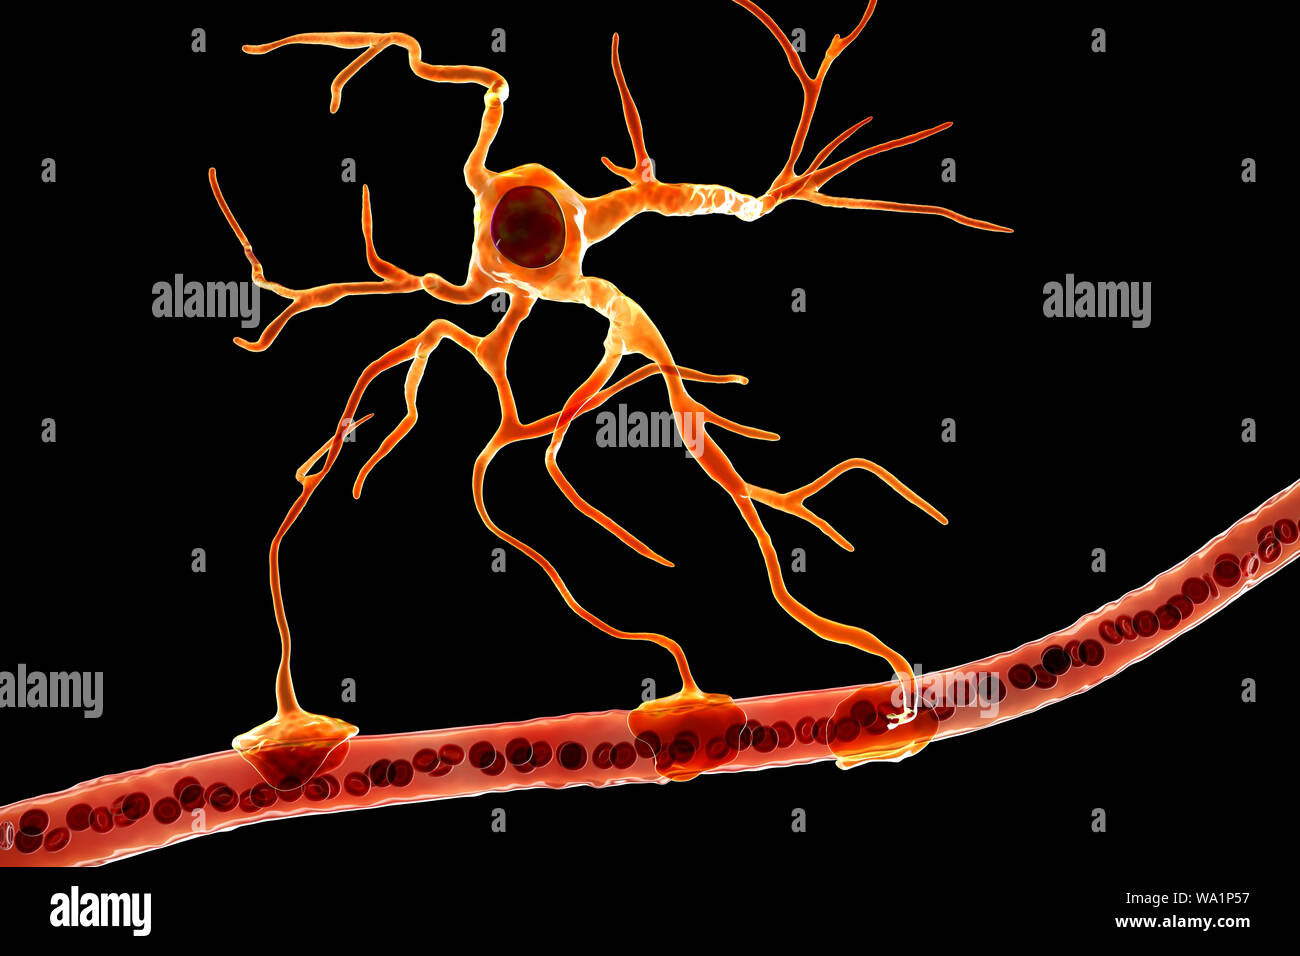 Astrocyte and blood vessel, computer illustration. Astrocytes, brain